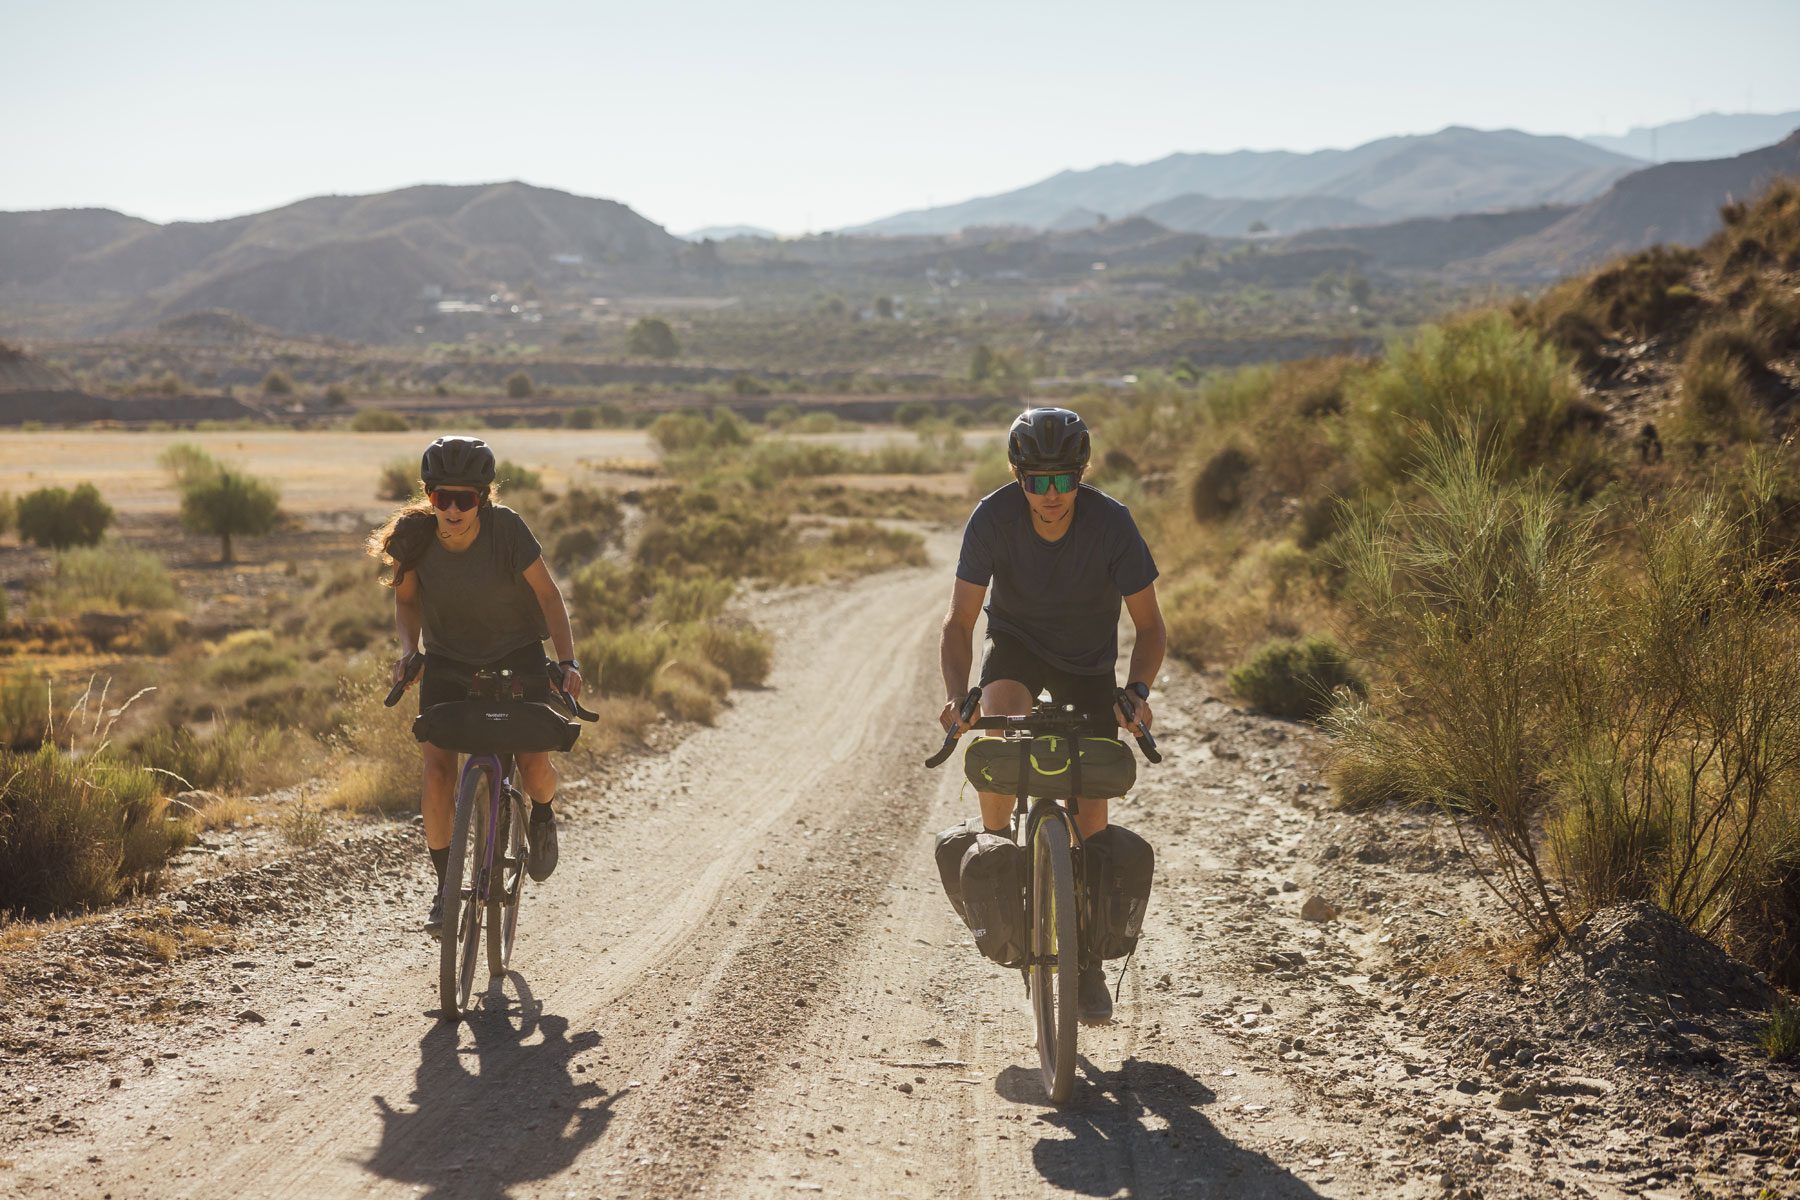 Wilier Adlar lightweight carbon bikepacking gravel touring bike, adventure riding pair